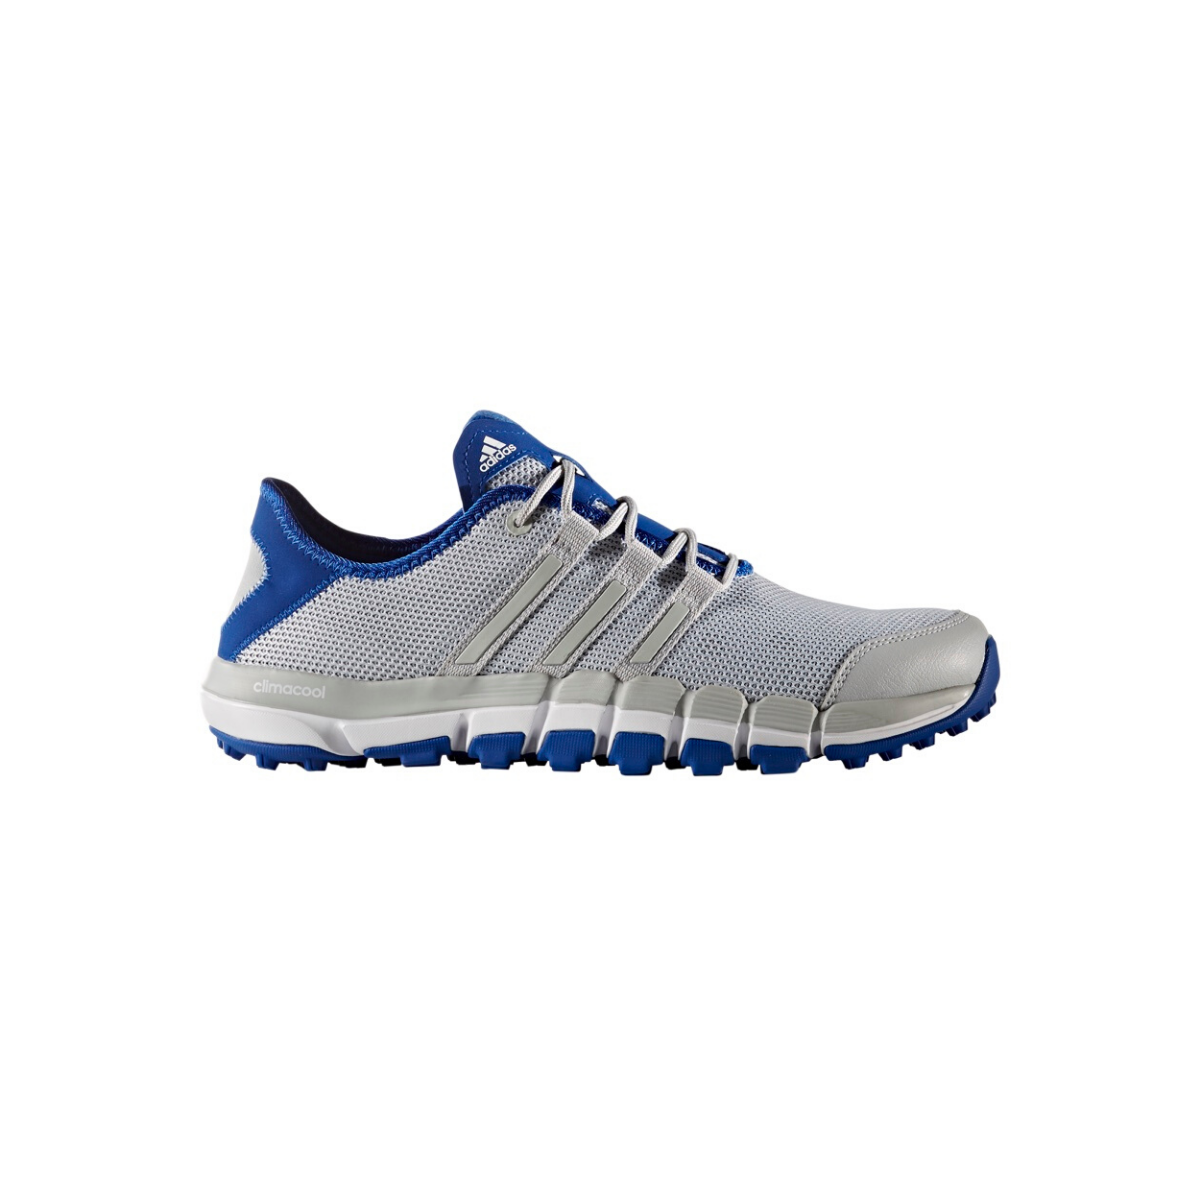 adidas Climacool ST Schuh Herren grau/blau bei golfshop.de bestellen!